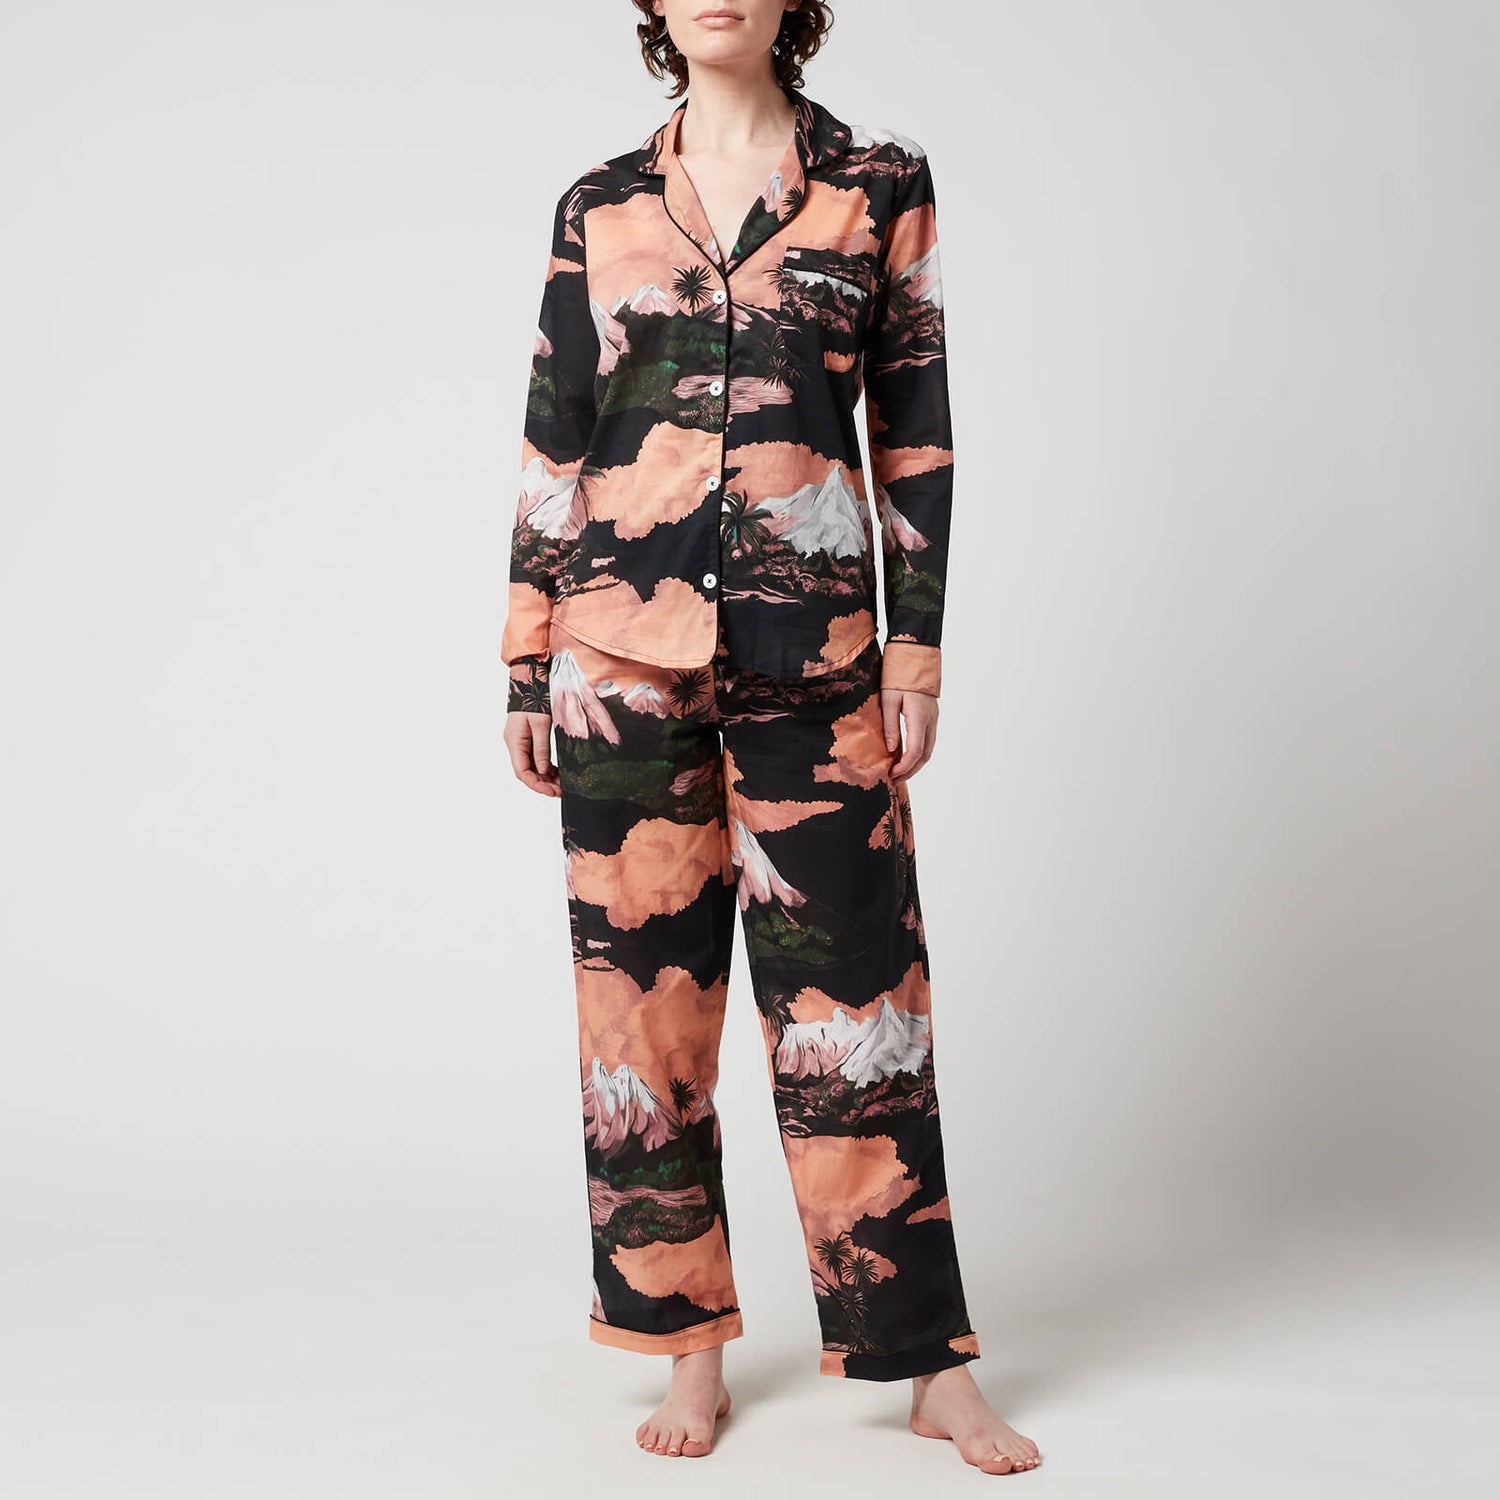 Desmond & Dempsey Women's Wakatipu Pyjama Set - Pink/Black - XS